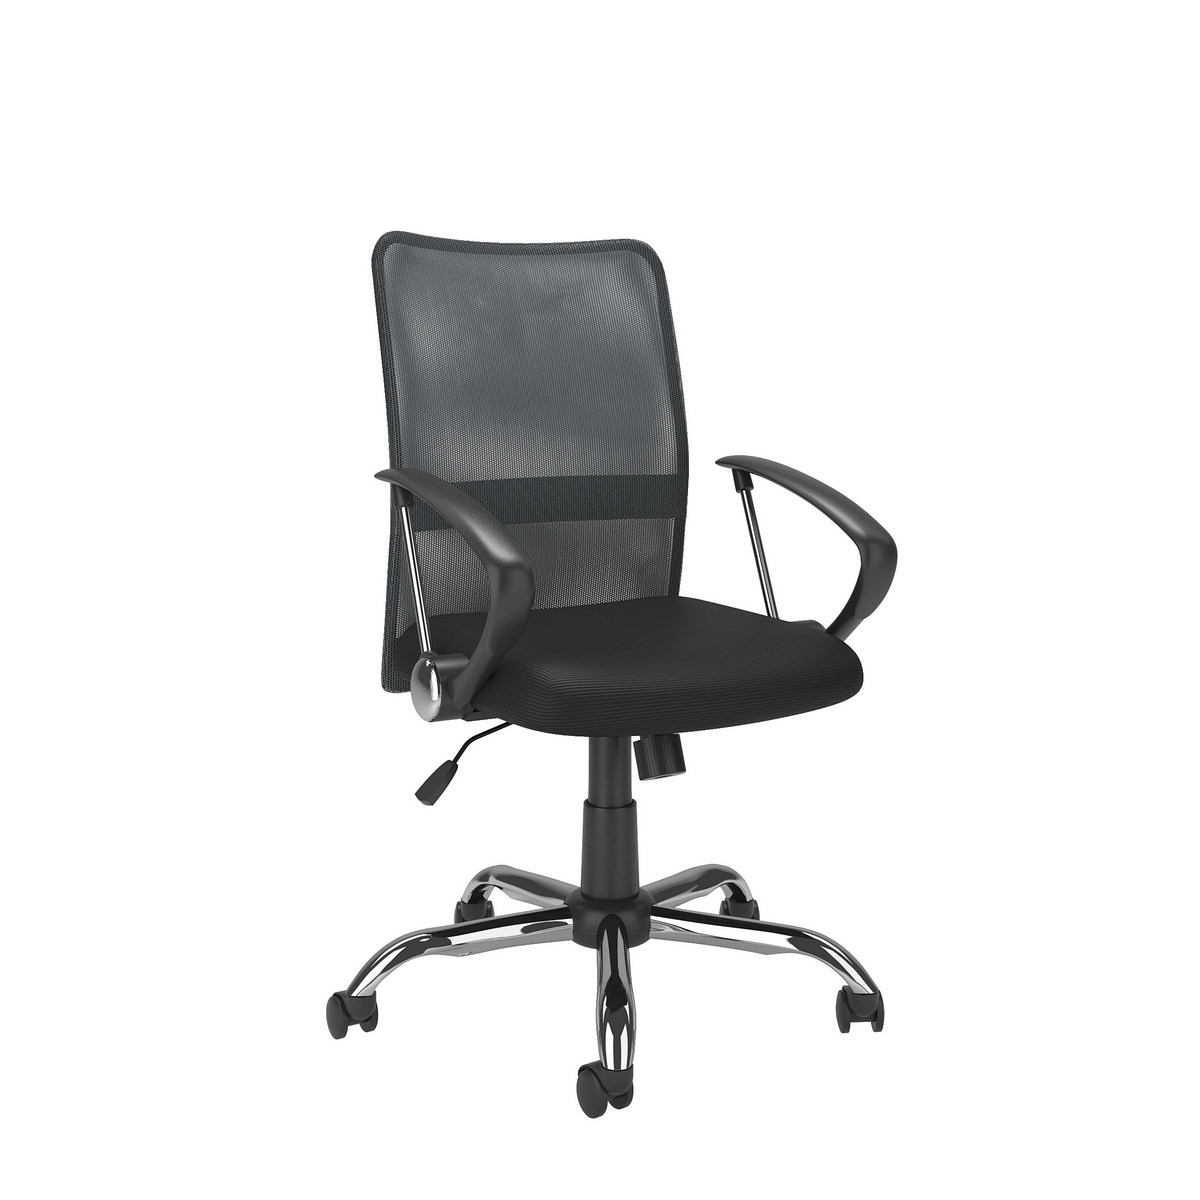 Corliving Whl-726-c Workspace Office Chair W/ Contoured Dark Grey Mesh Back